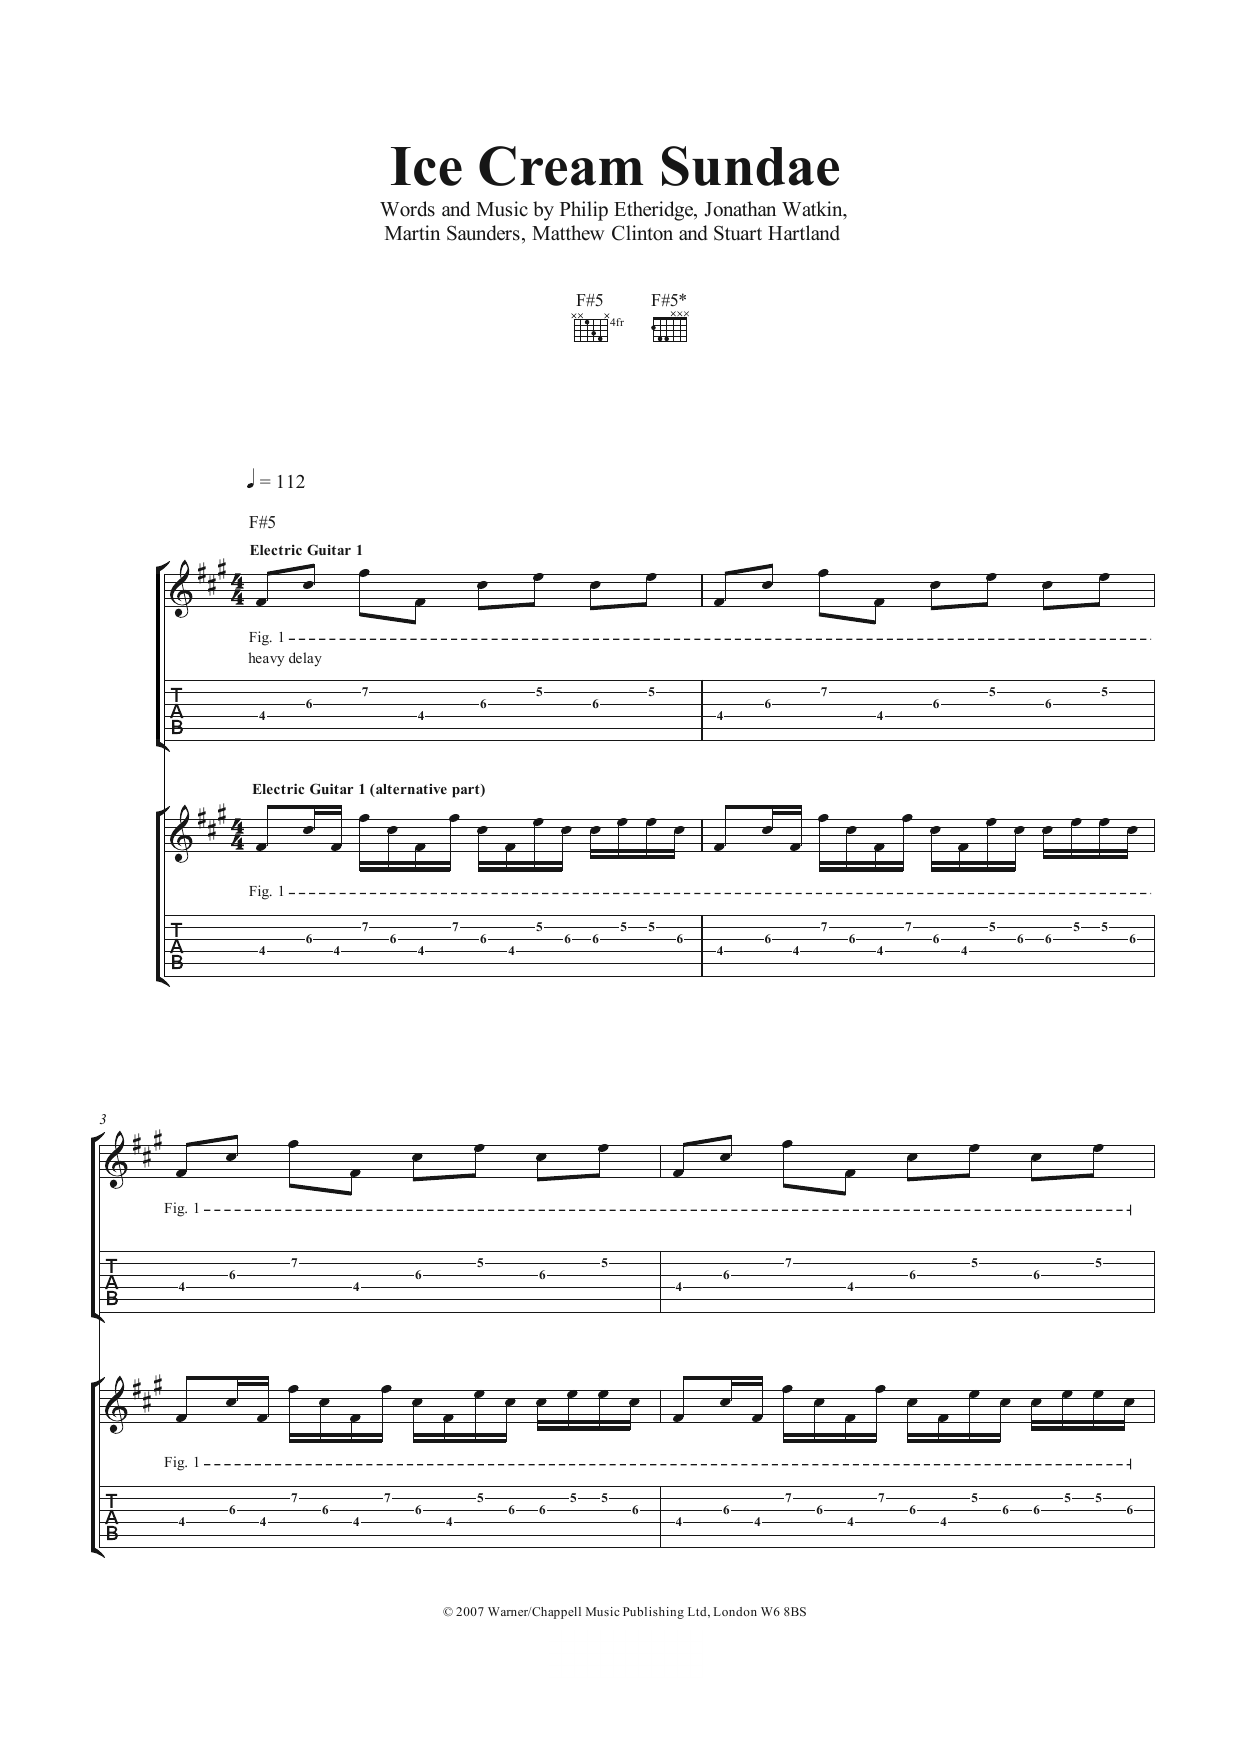 The Twang Ice Cream Sundae sheet music notes and chords arranged for Guitar Tab